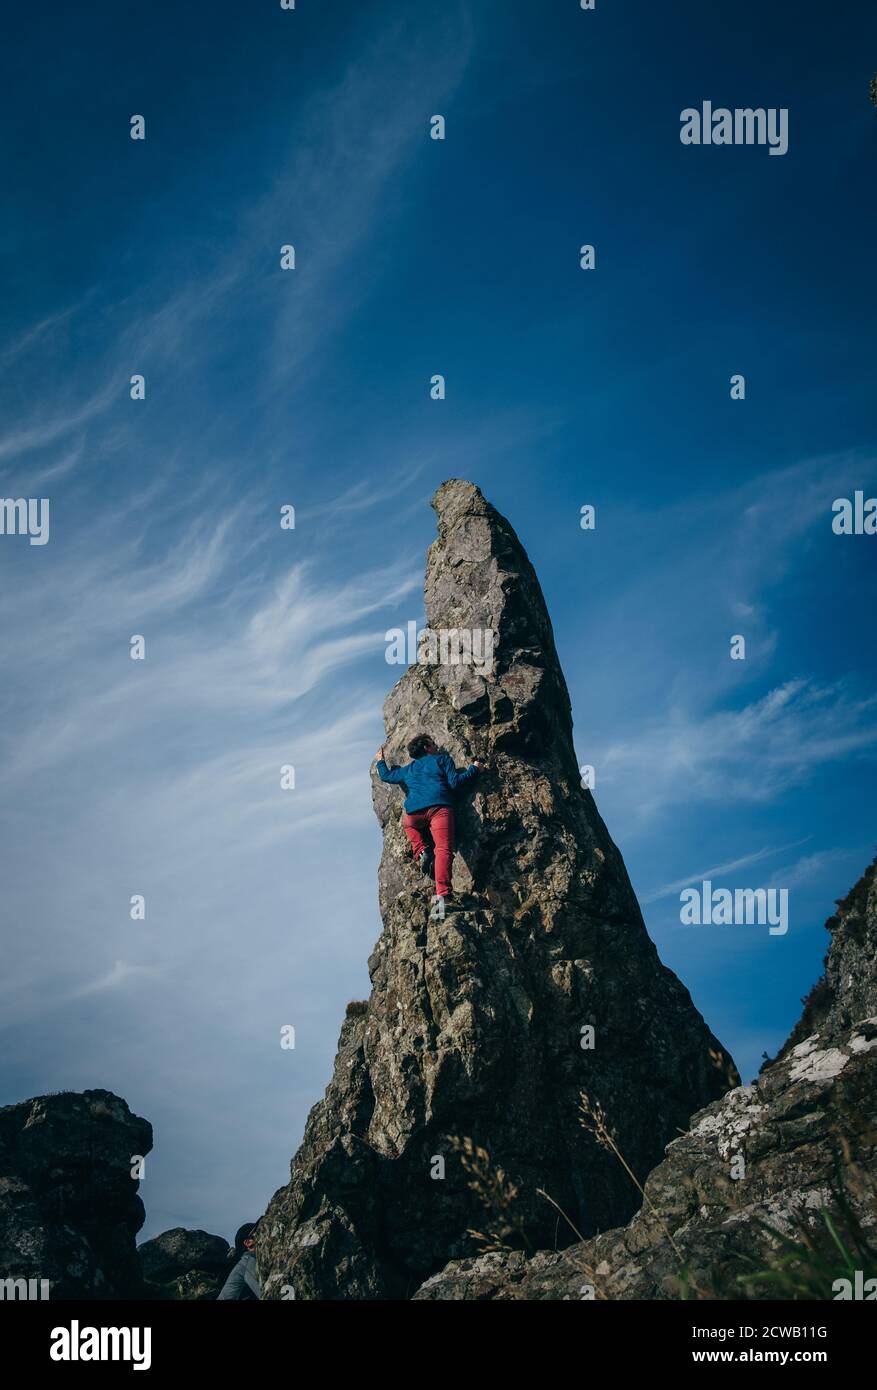 The Whangie, Scotland. Rock Climbing. Stock Photo